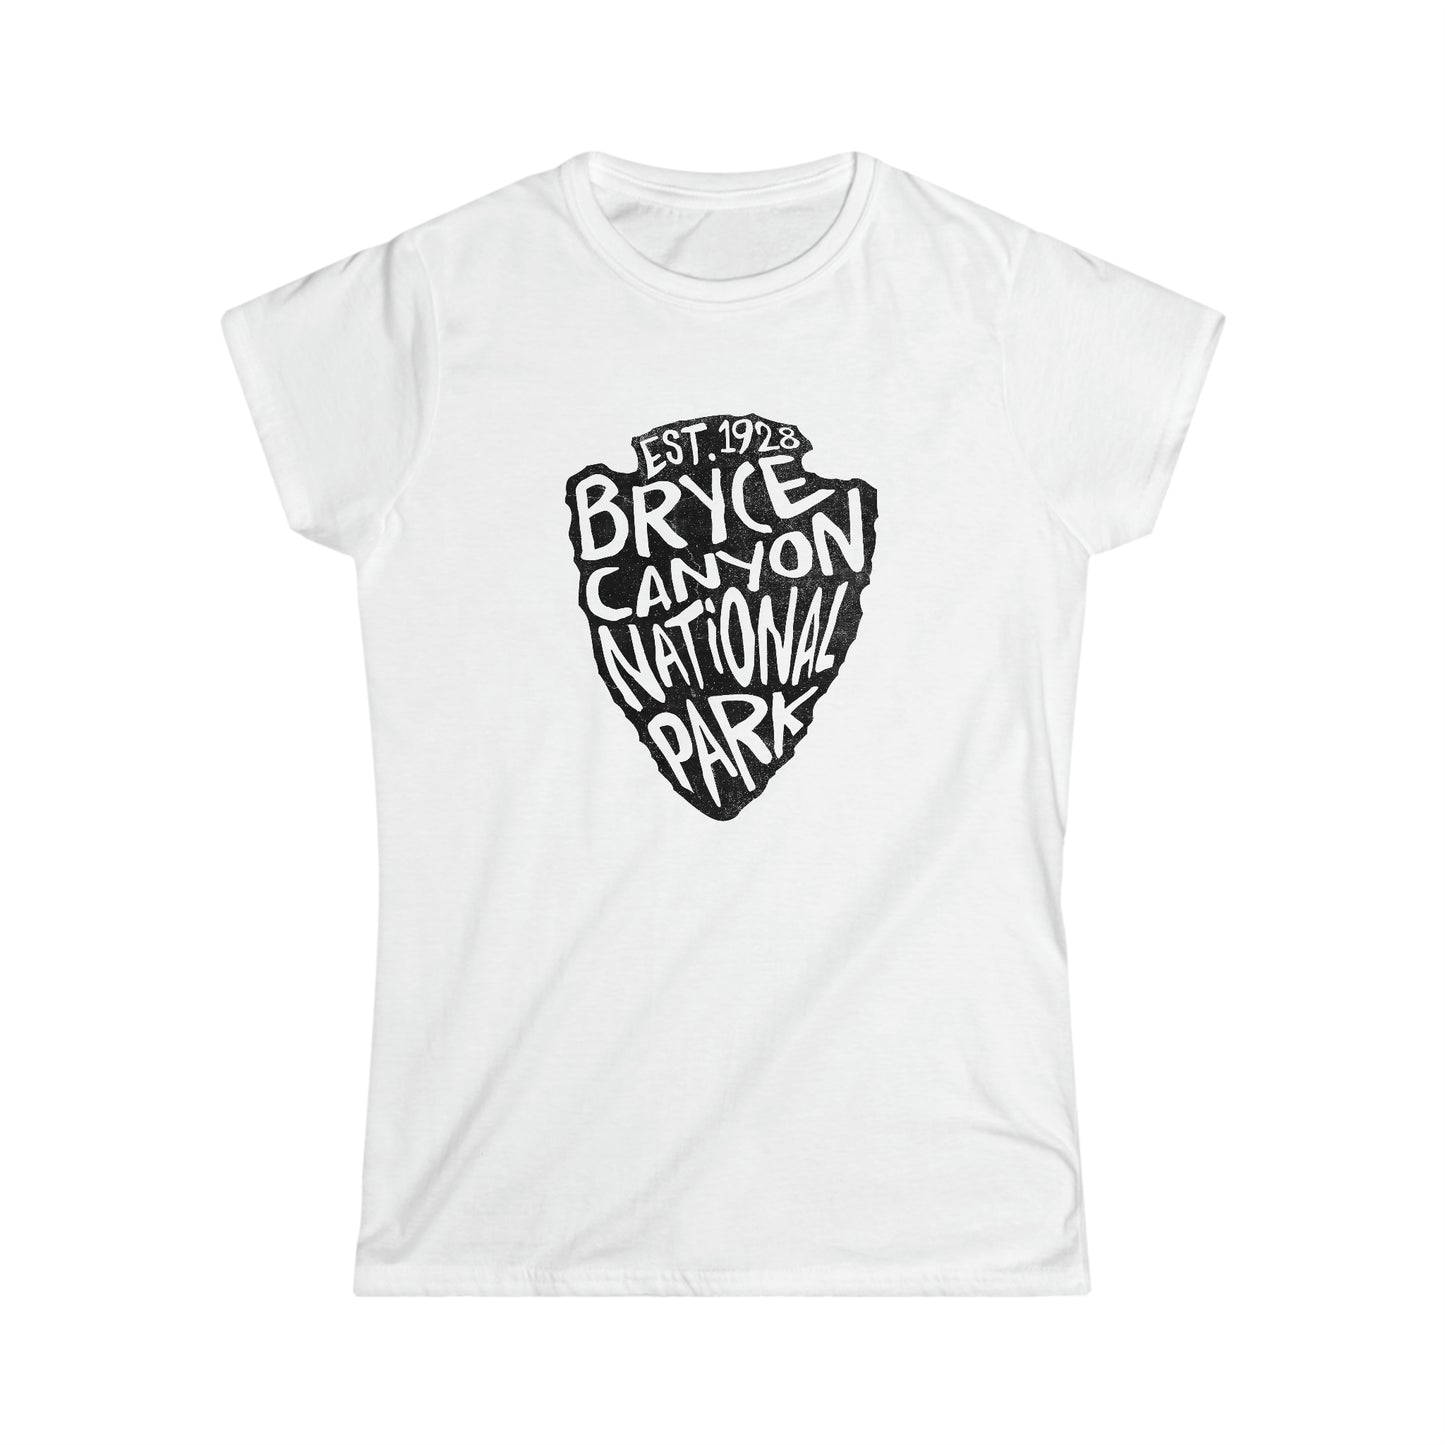 Bryce Canyon National Park Women's T-Shirt - Arrowhead Design